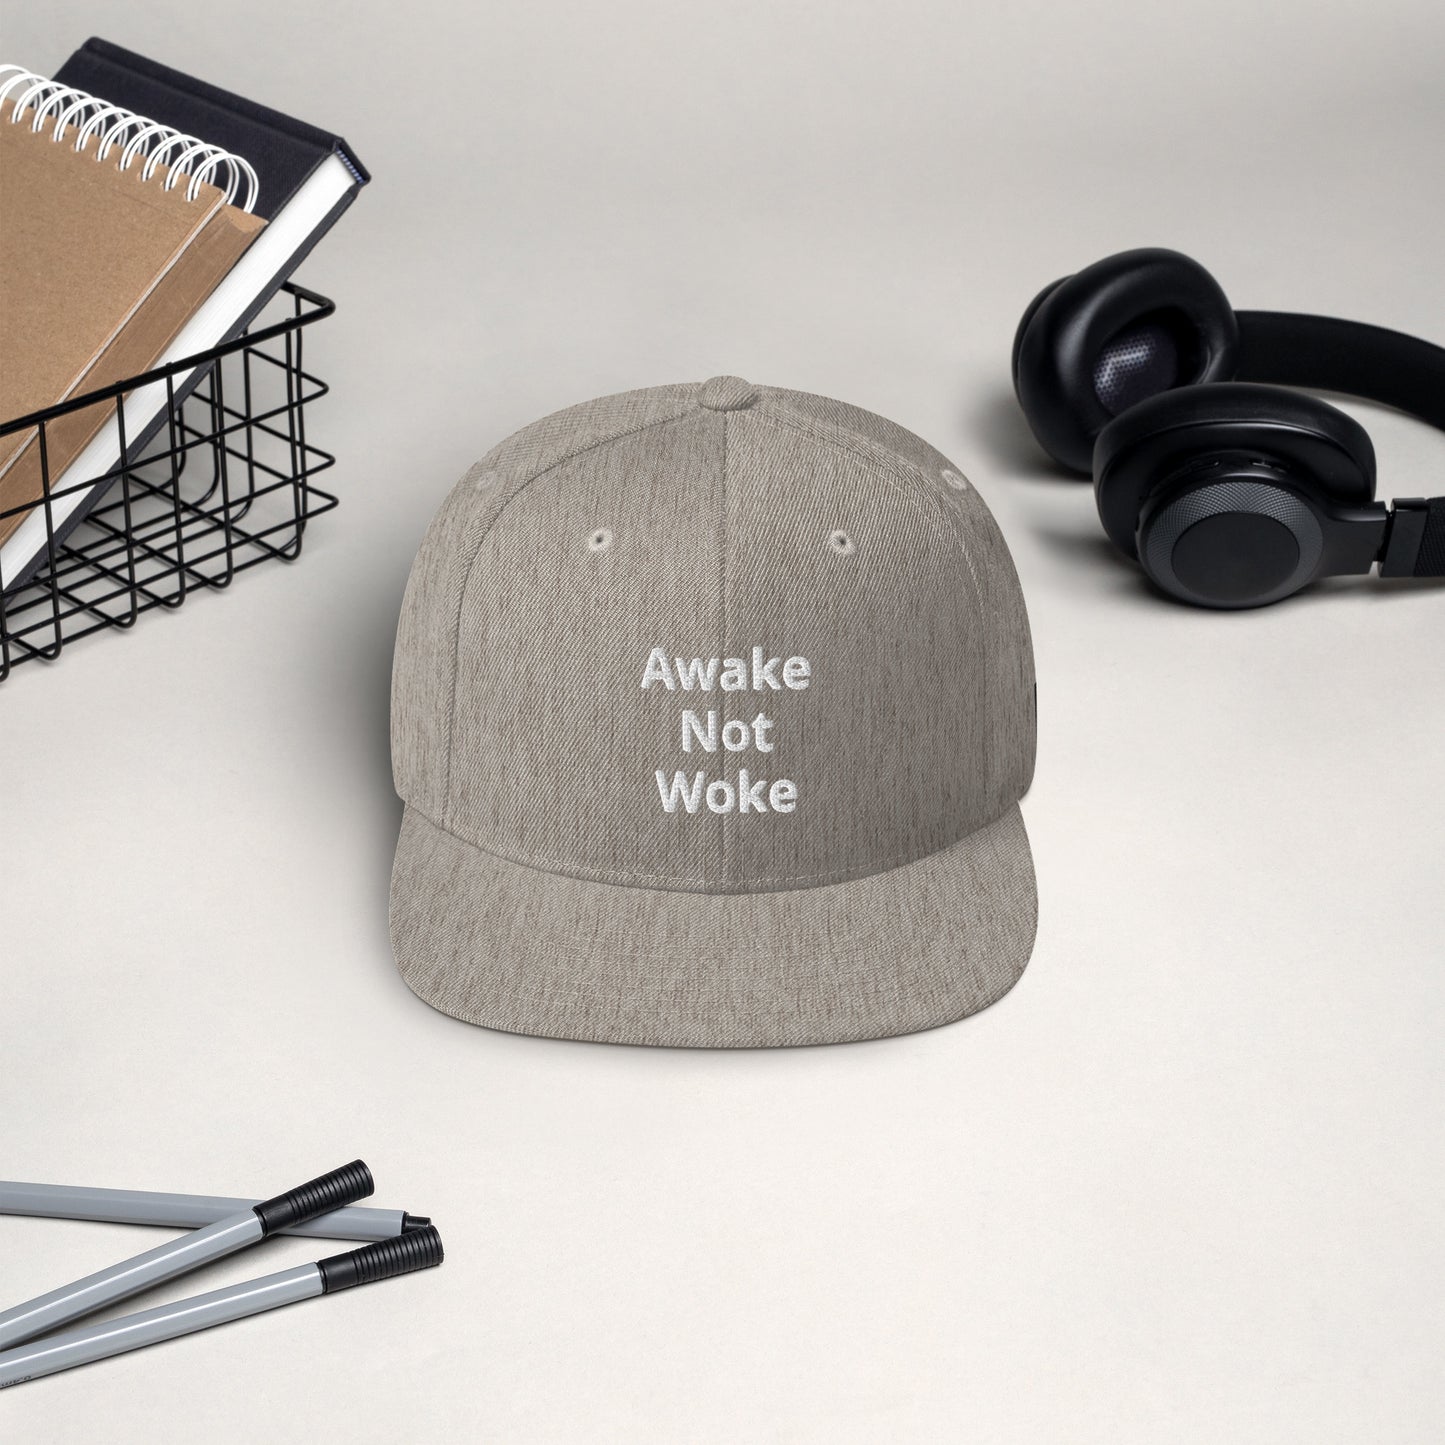 Awake Not Woke - Snapback Hat